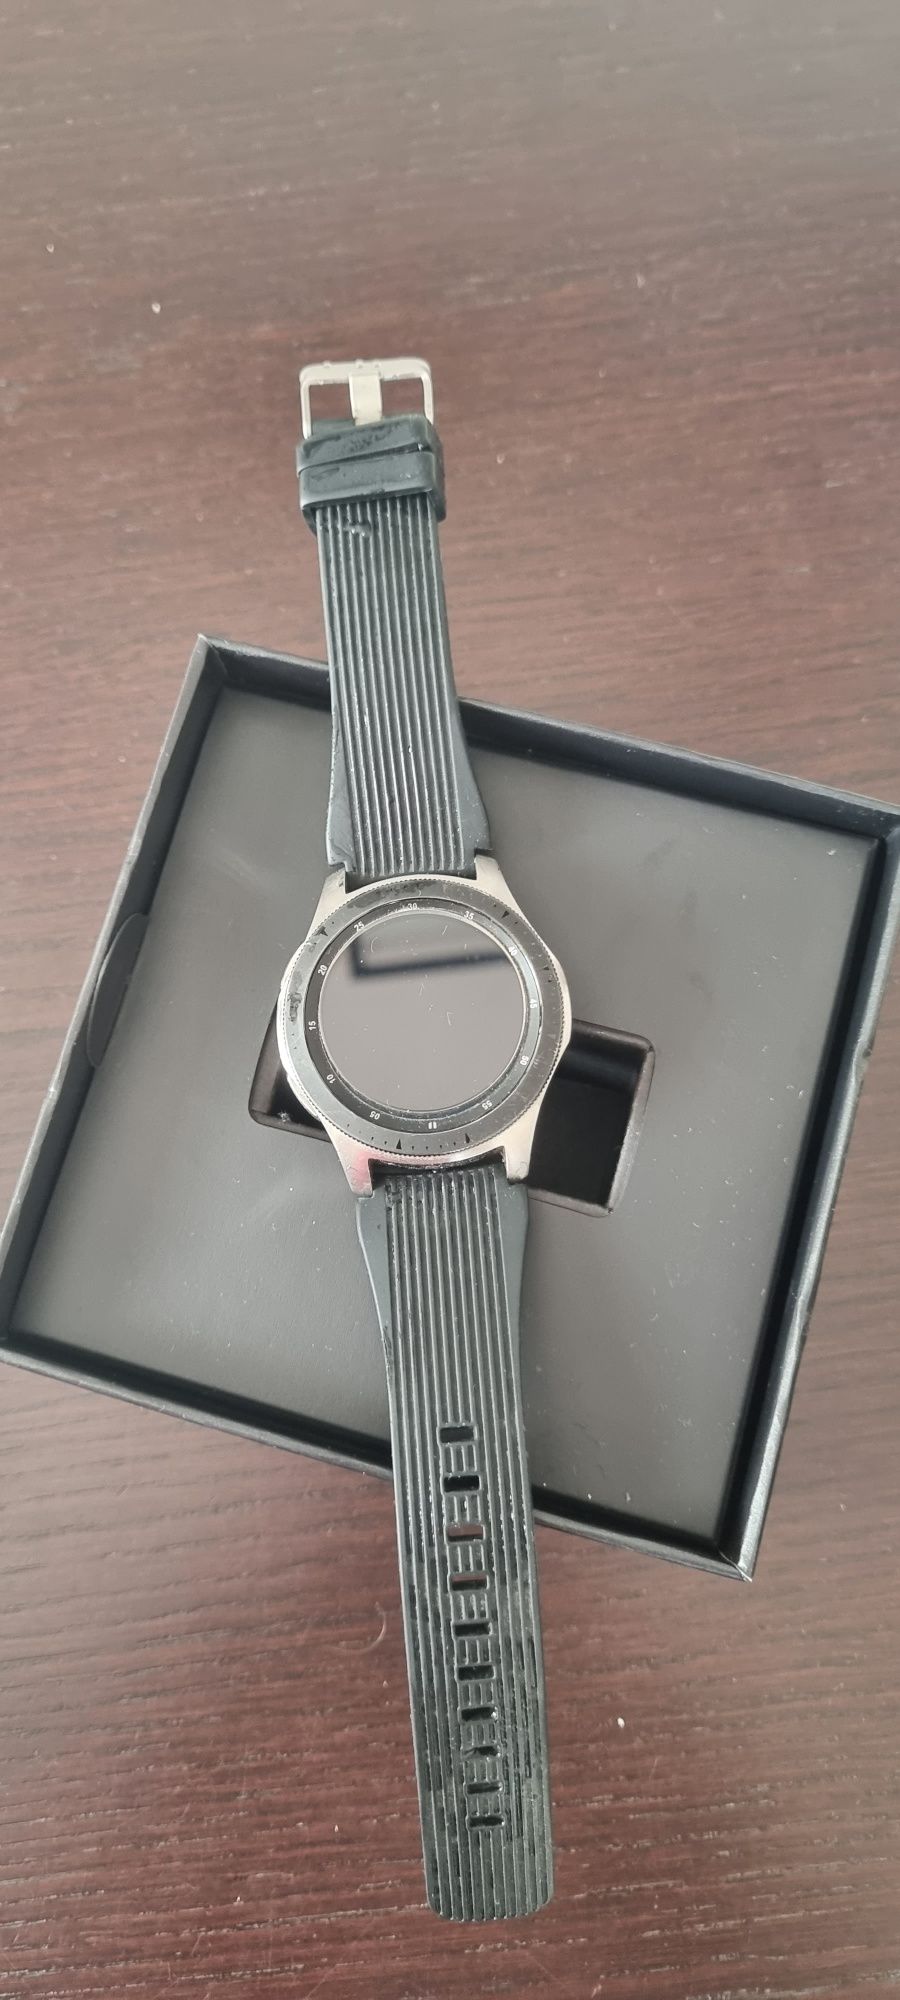 Vând smartwatch Samsung Galaxy Watch 46 mm Silver